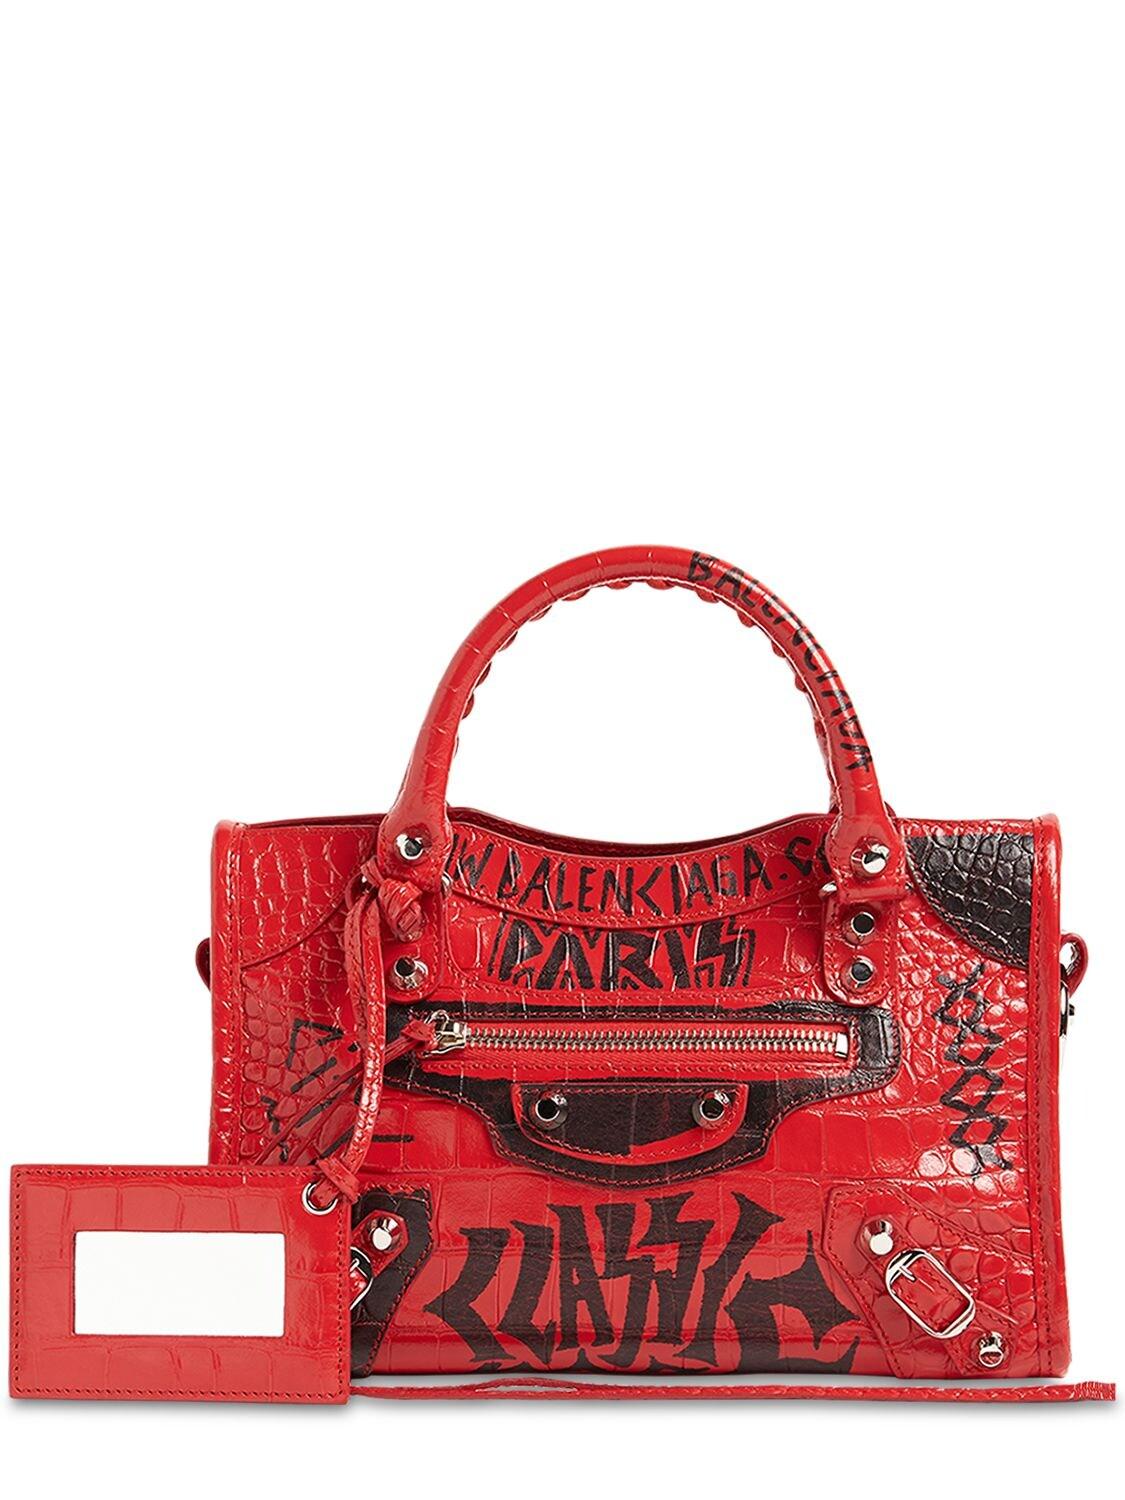 Balenciaga Mini City Graffiti Print Croco Leather Bag in Red | Lyst